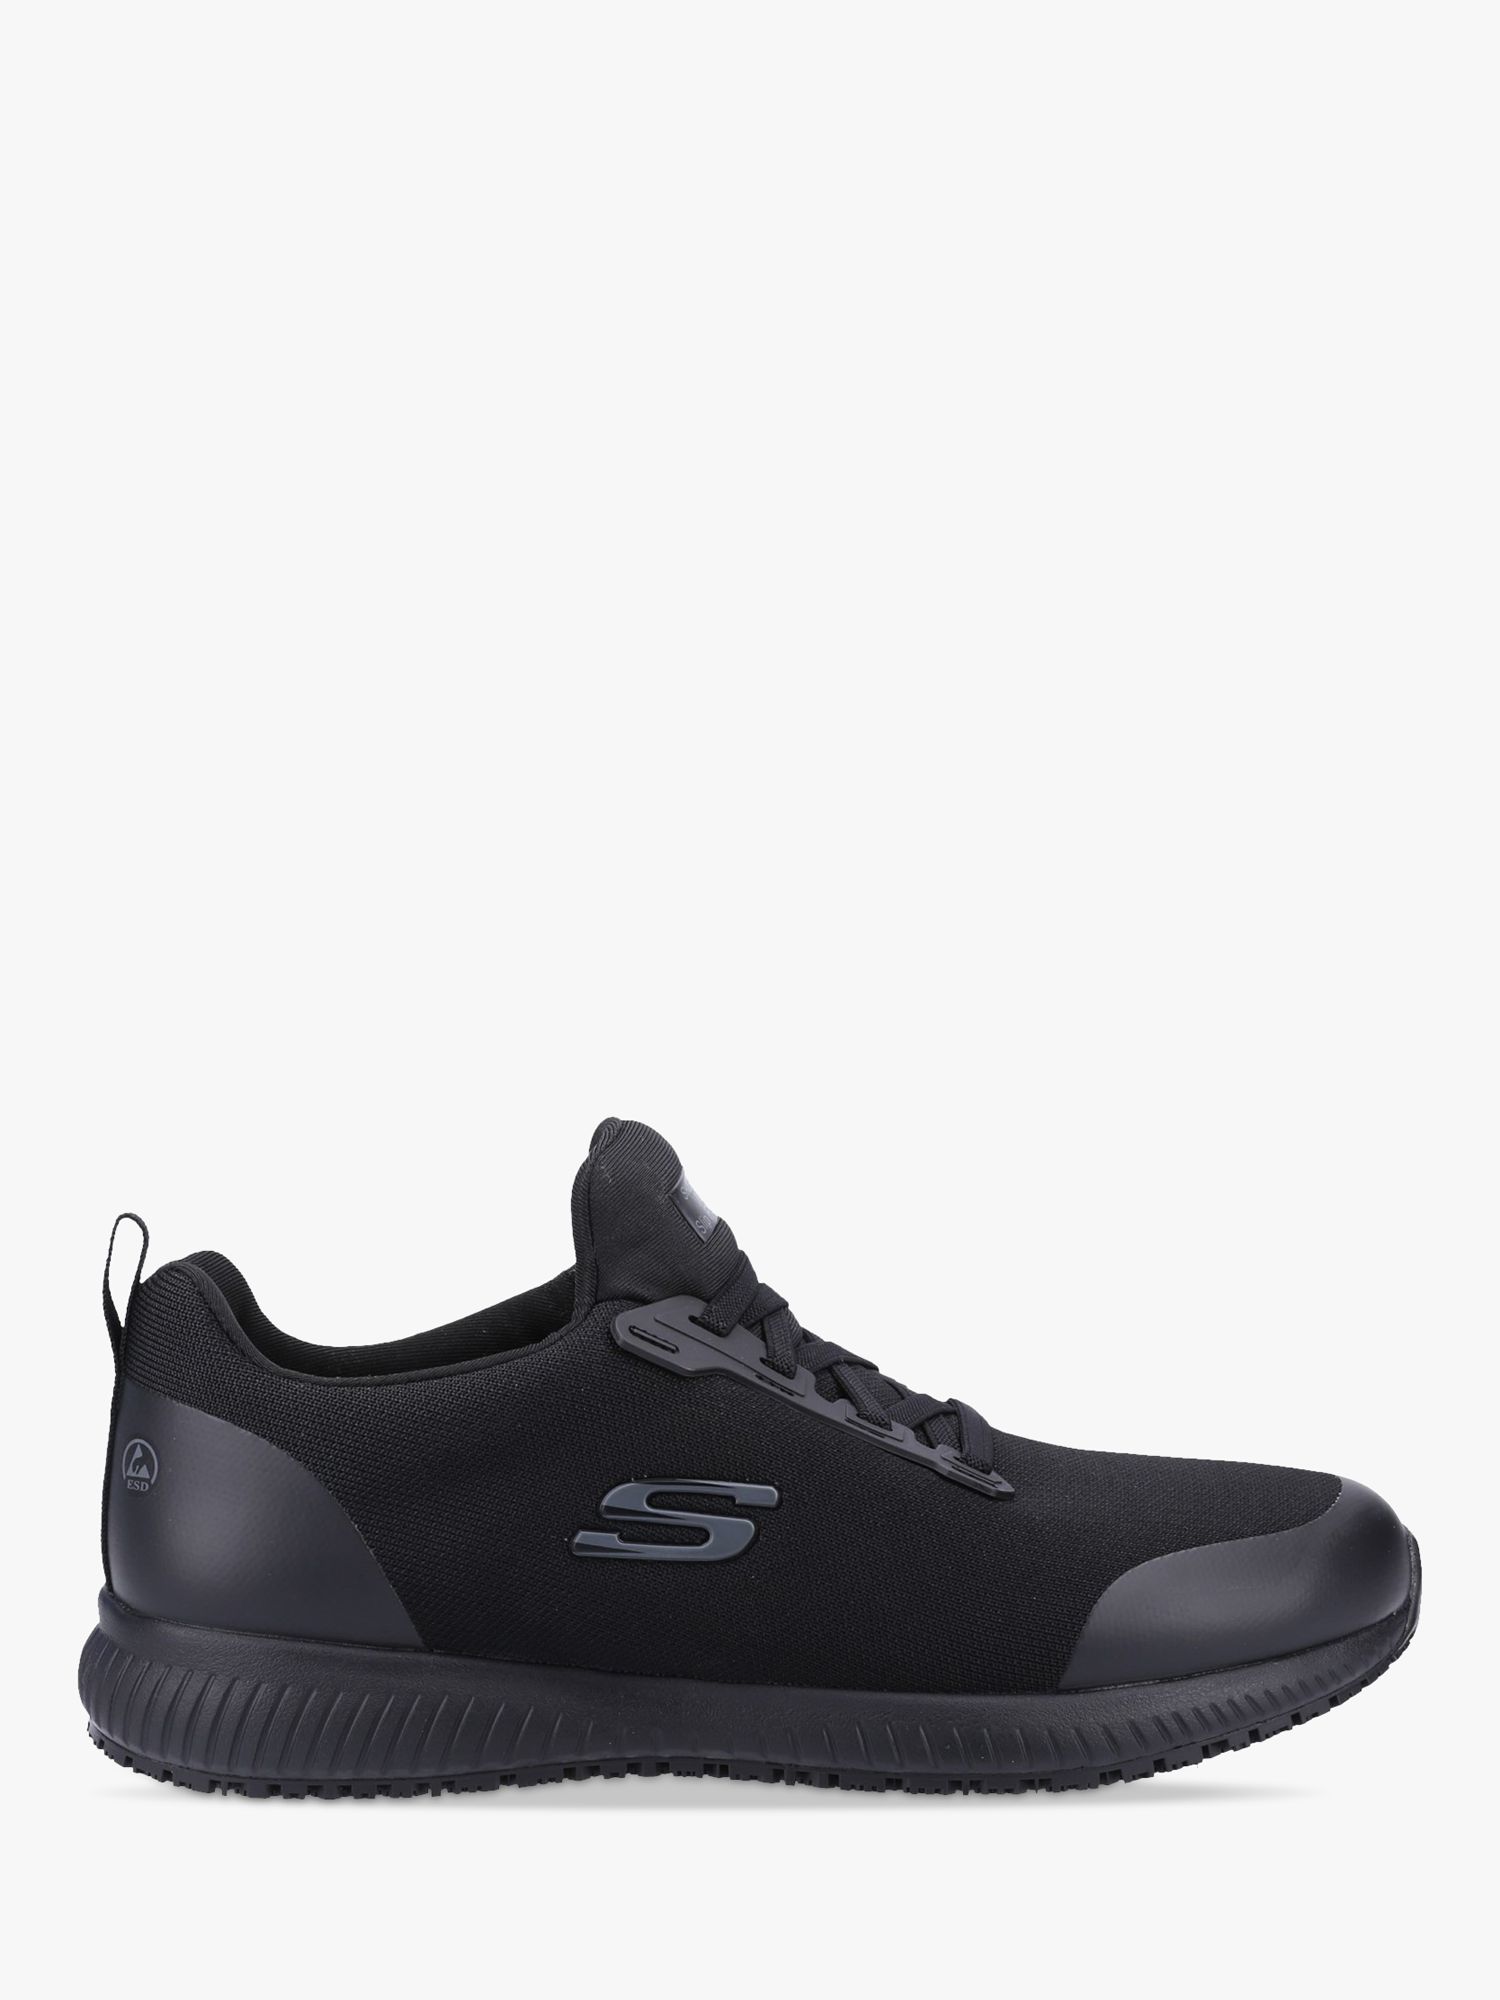 Skechers Squad SR Myton Occupational Shoes, Black, 9